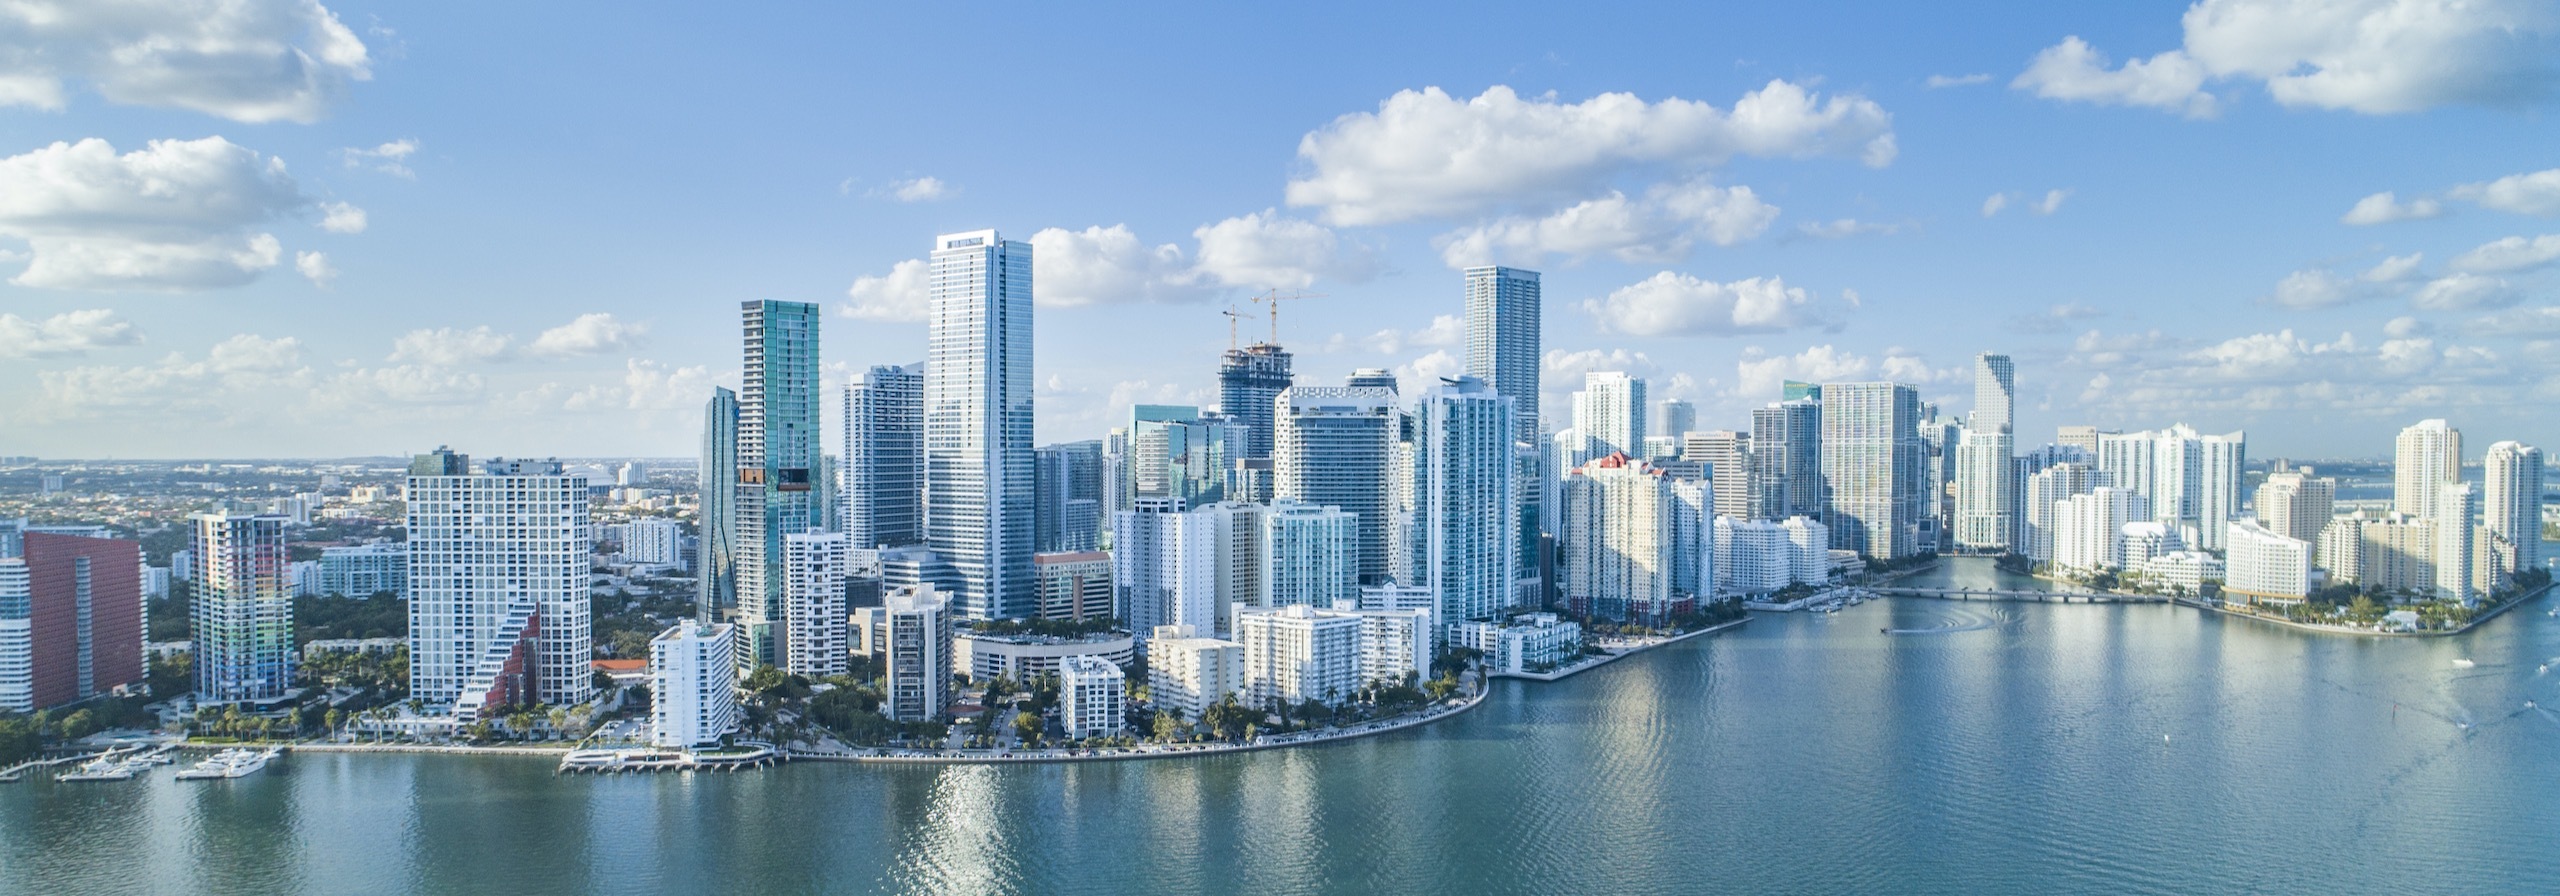 Luxury Miami Condos For Sale 